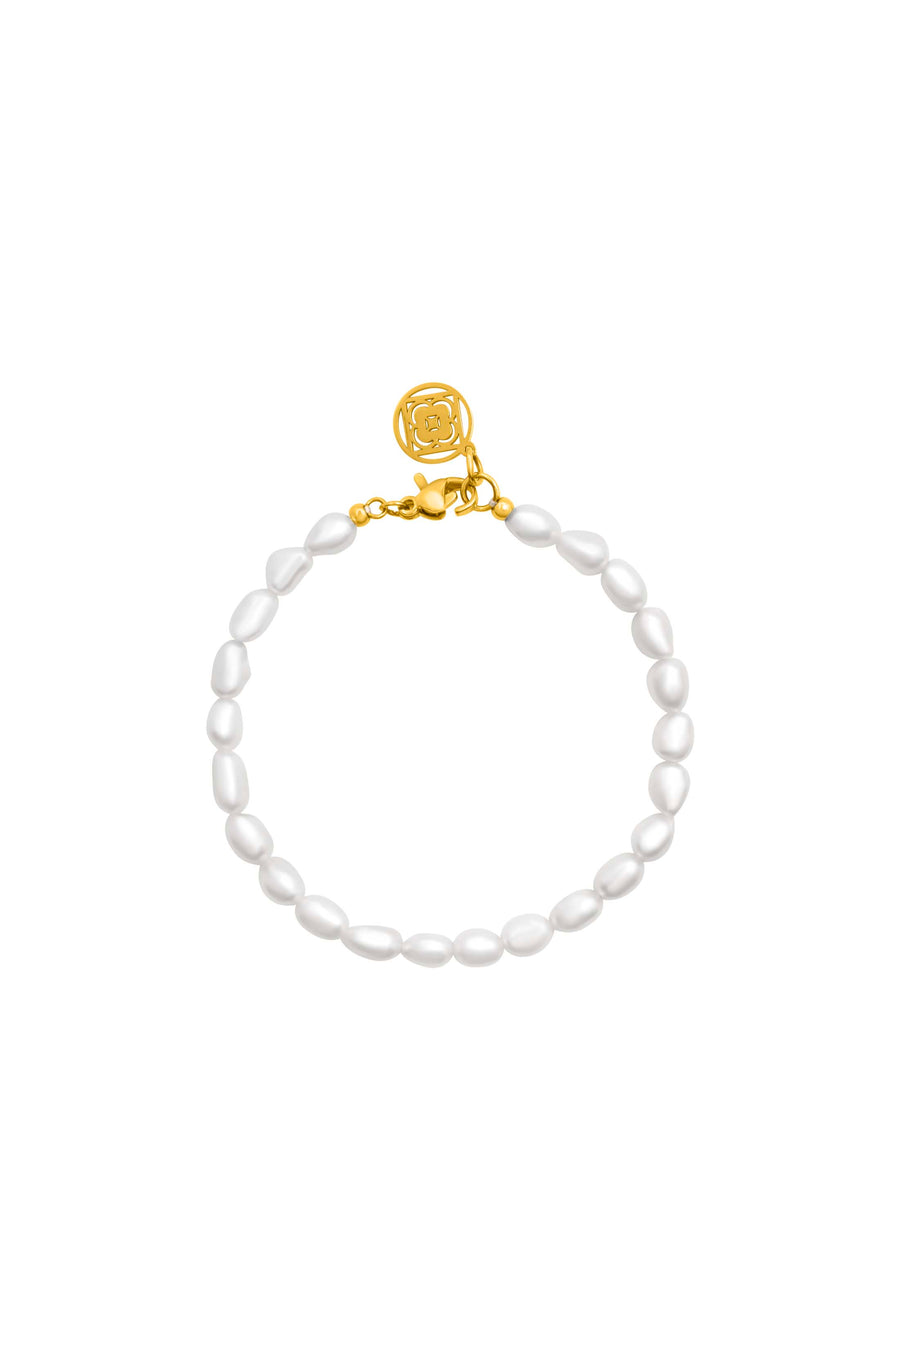 Dara’s Freshwater Pearl Bracelet